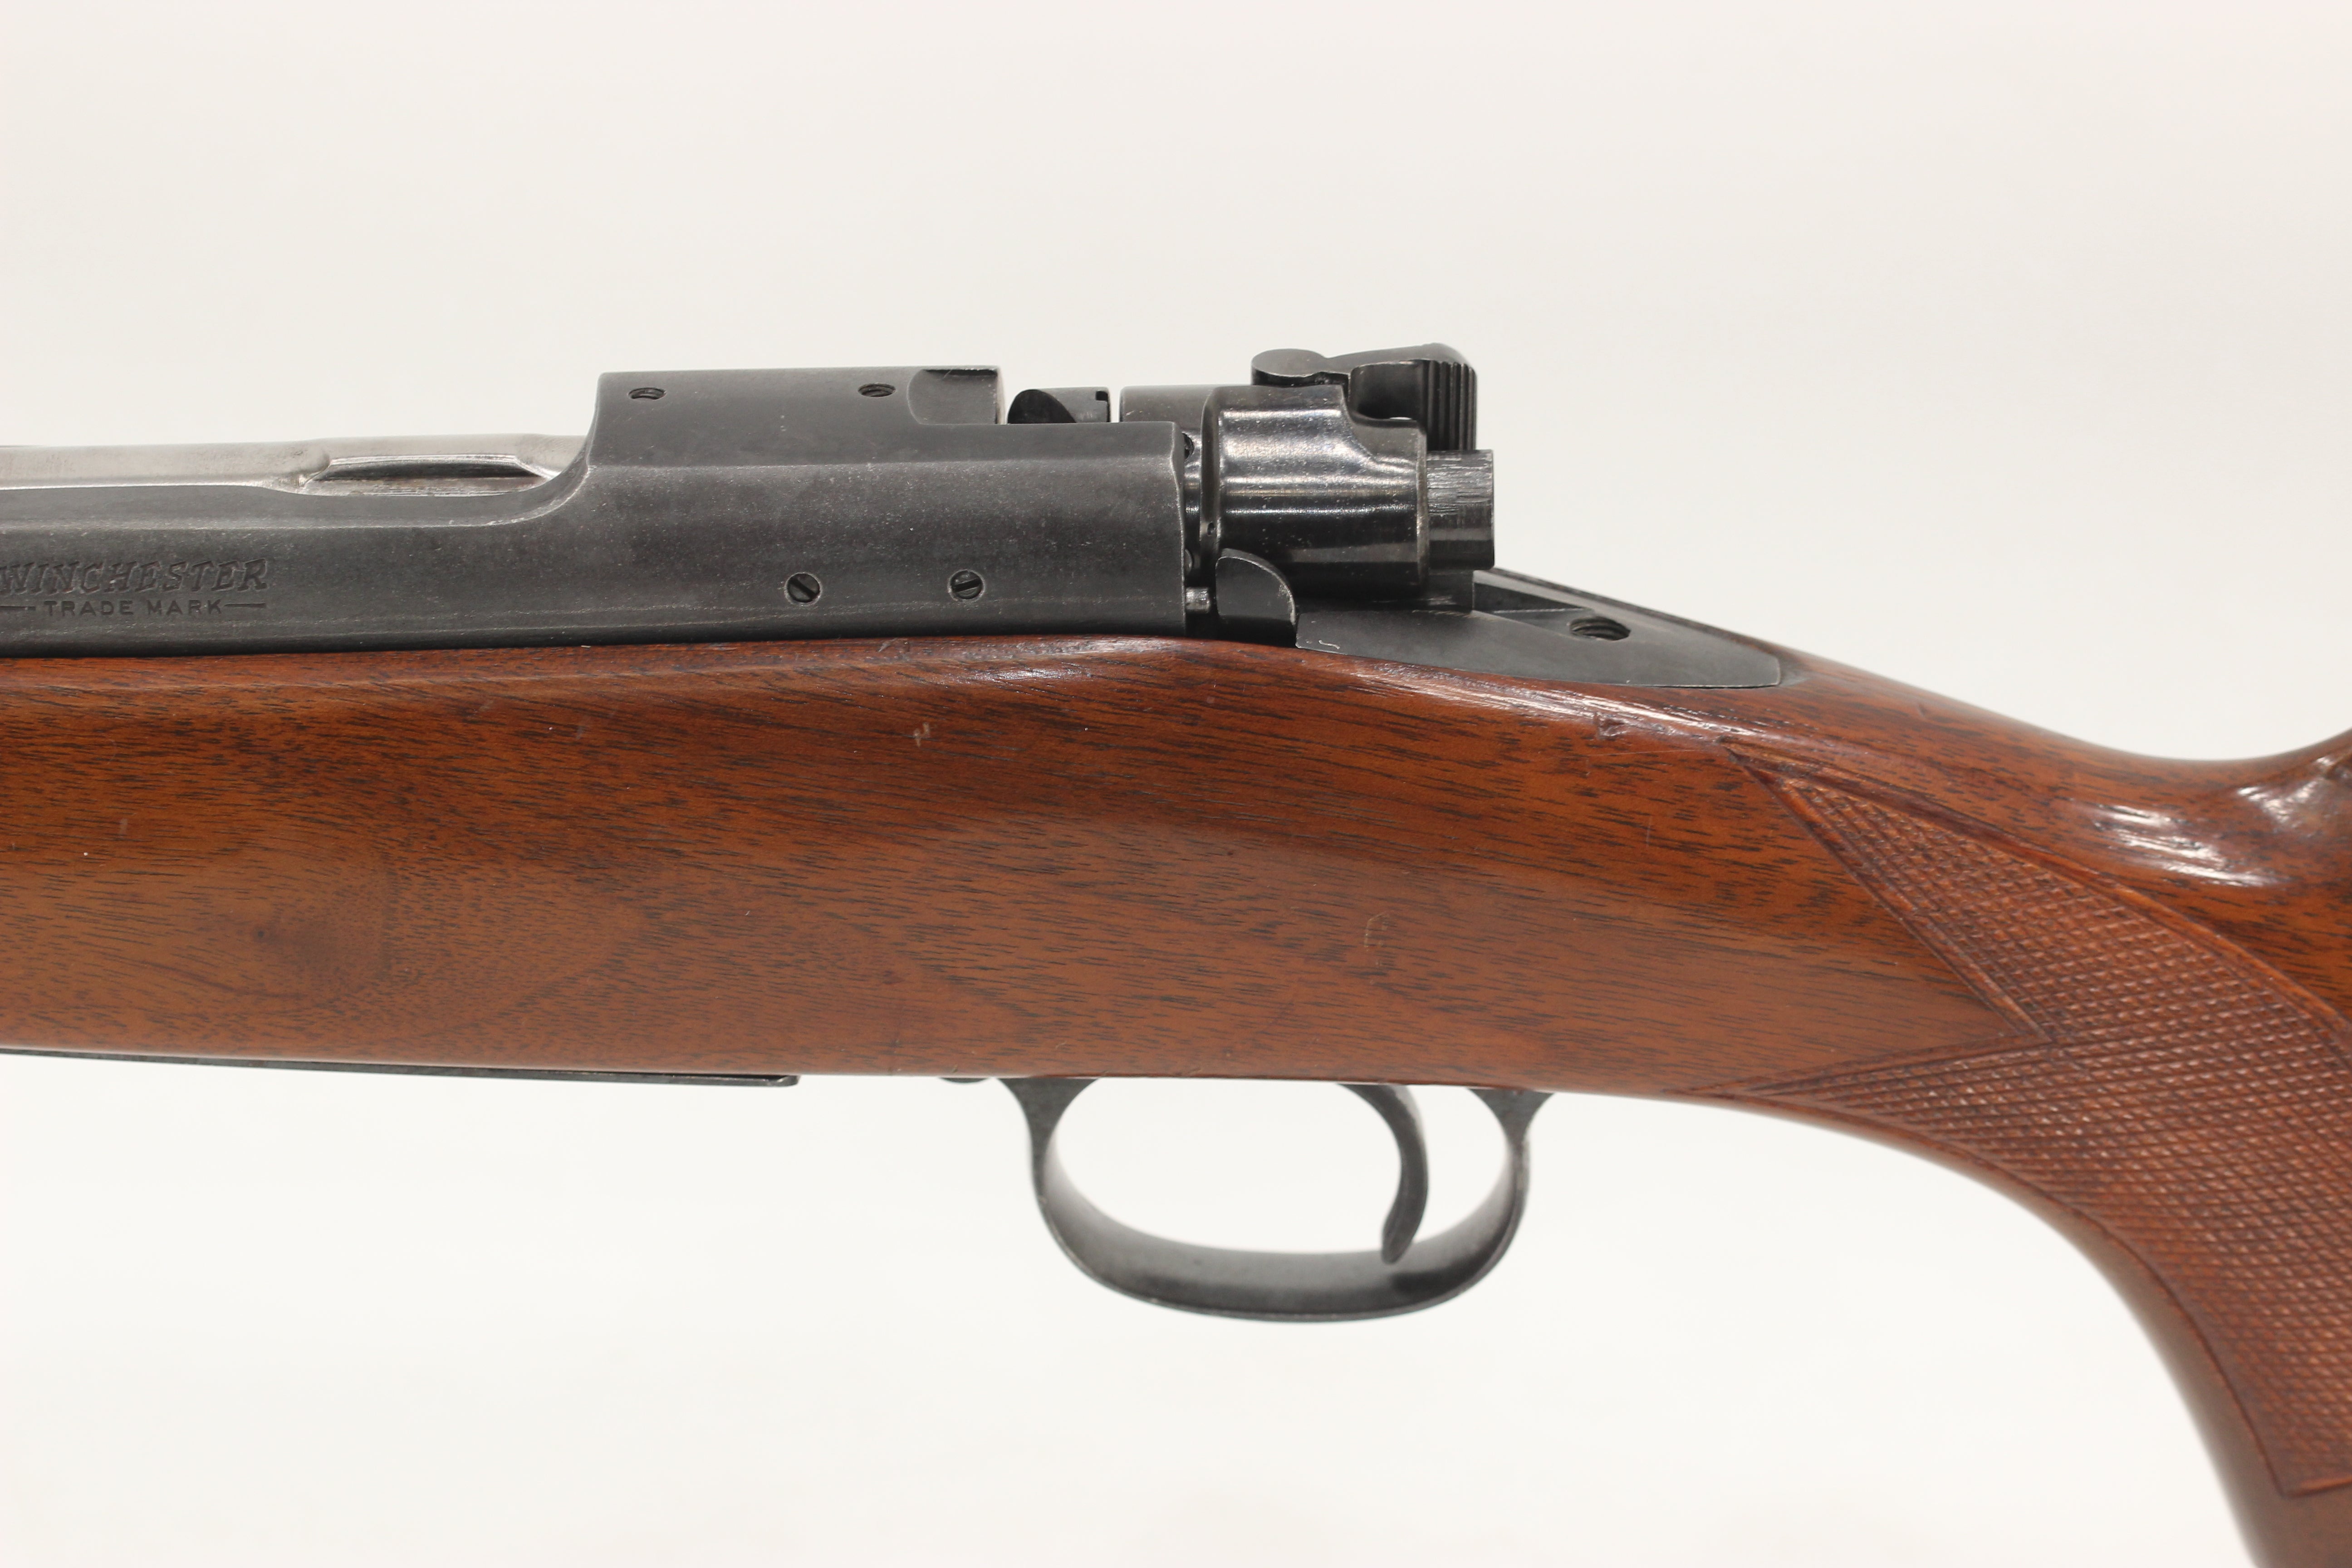 .30-06 Springfield Standard Rifle - 1959